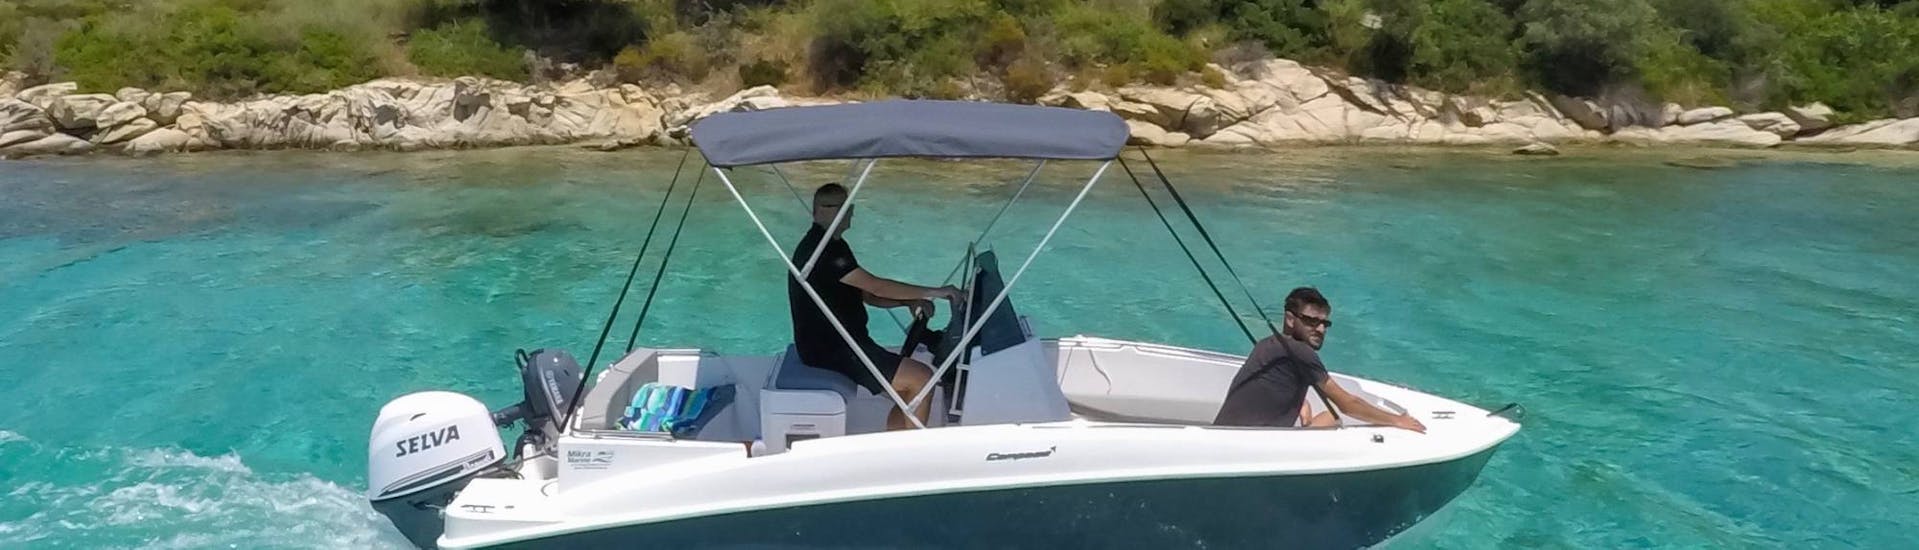 Alquiler de barco en Ormos Panagias - Vourvourou, Isla de Diaporos & Blue Lagoon (Diaporos).